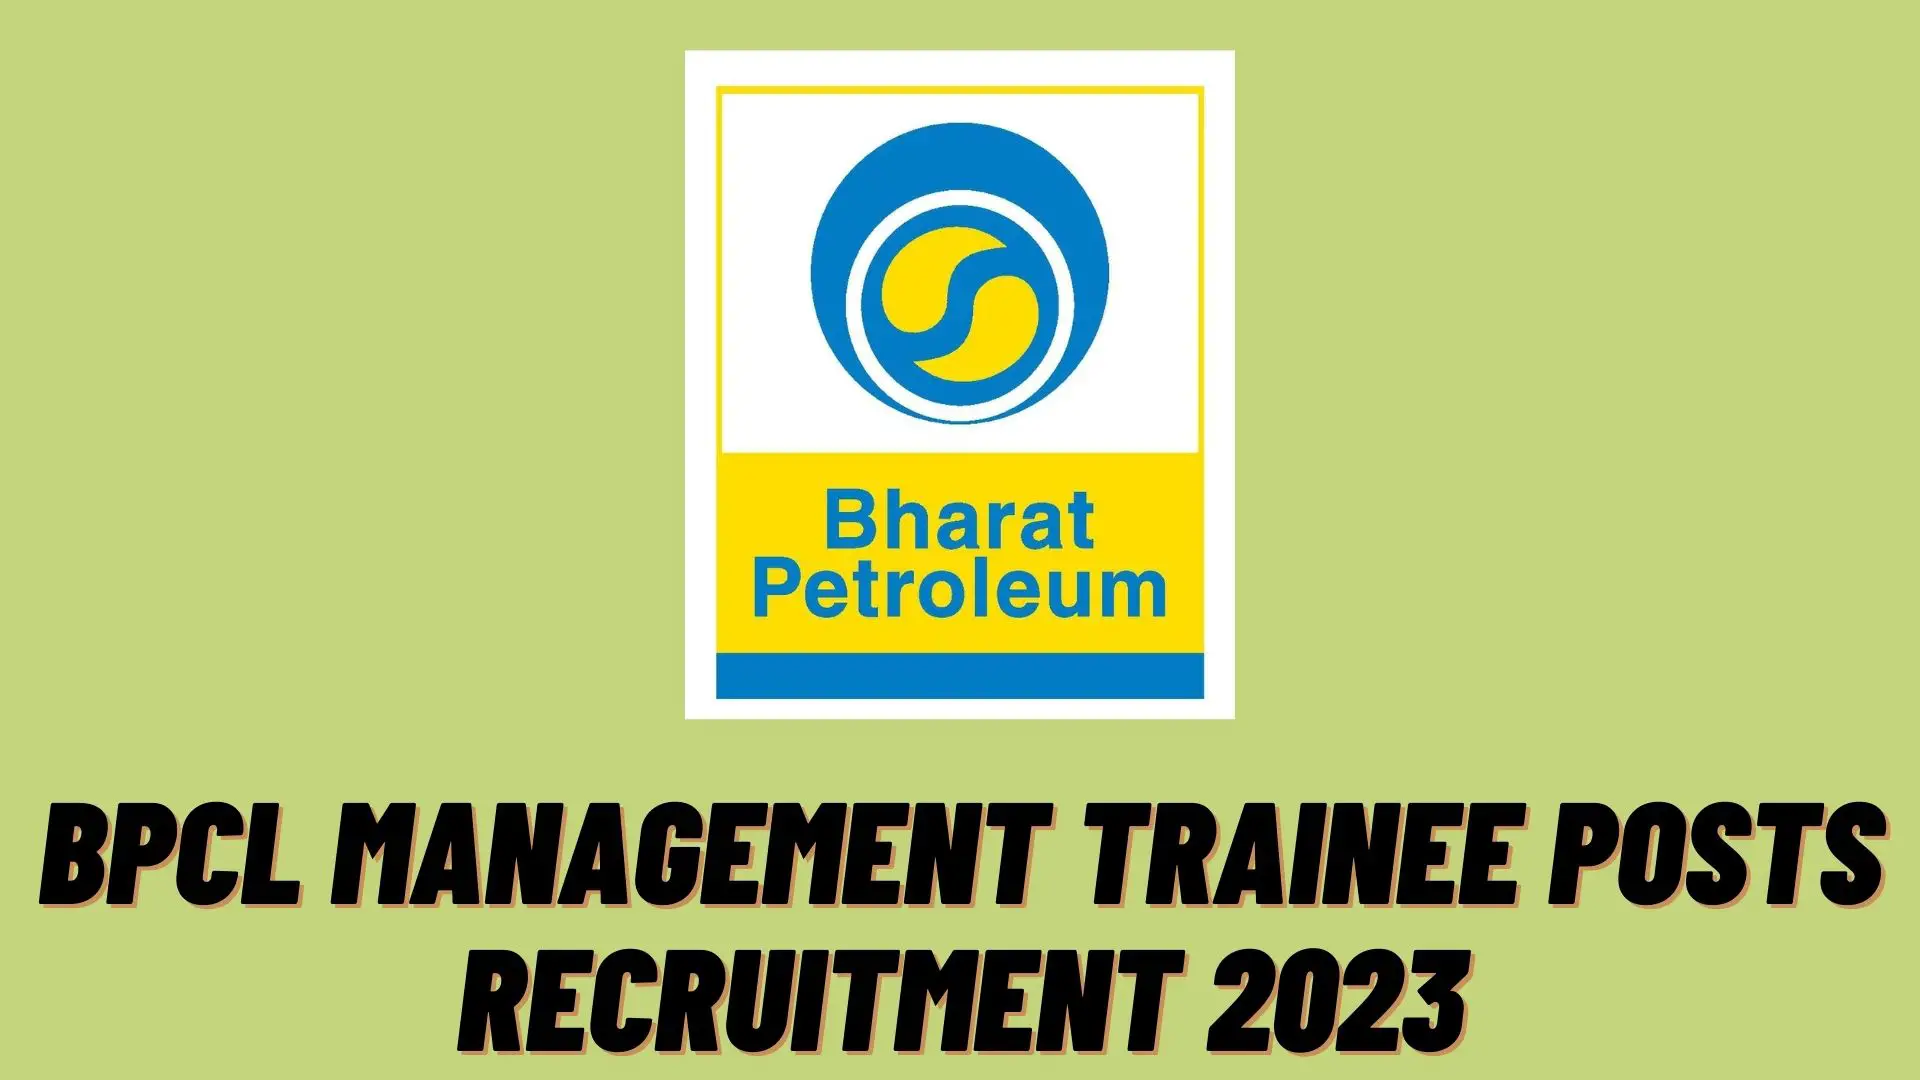 BPCL Management Trainee Posts Recruitment 2023